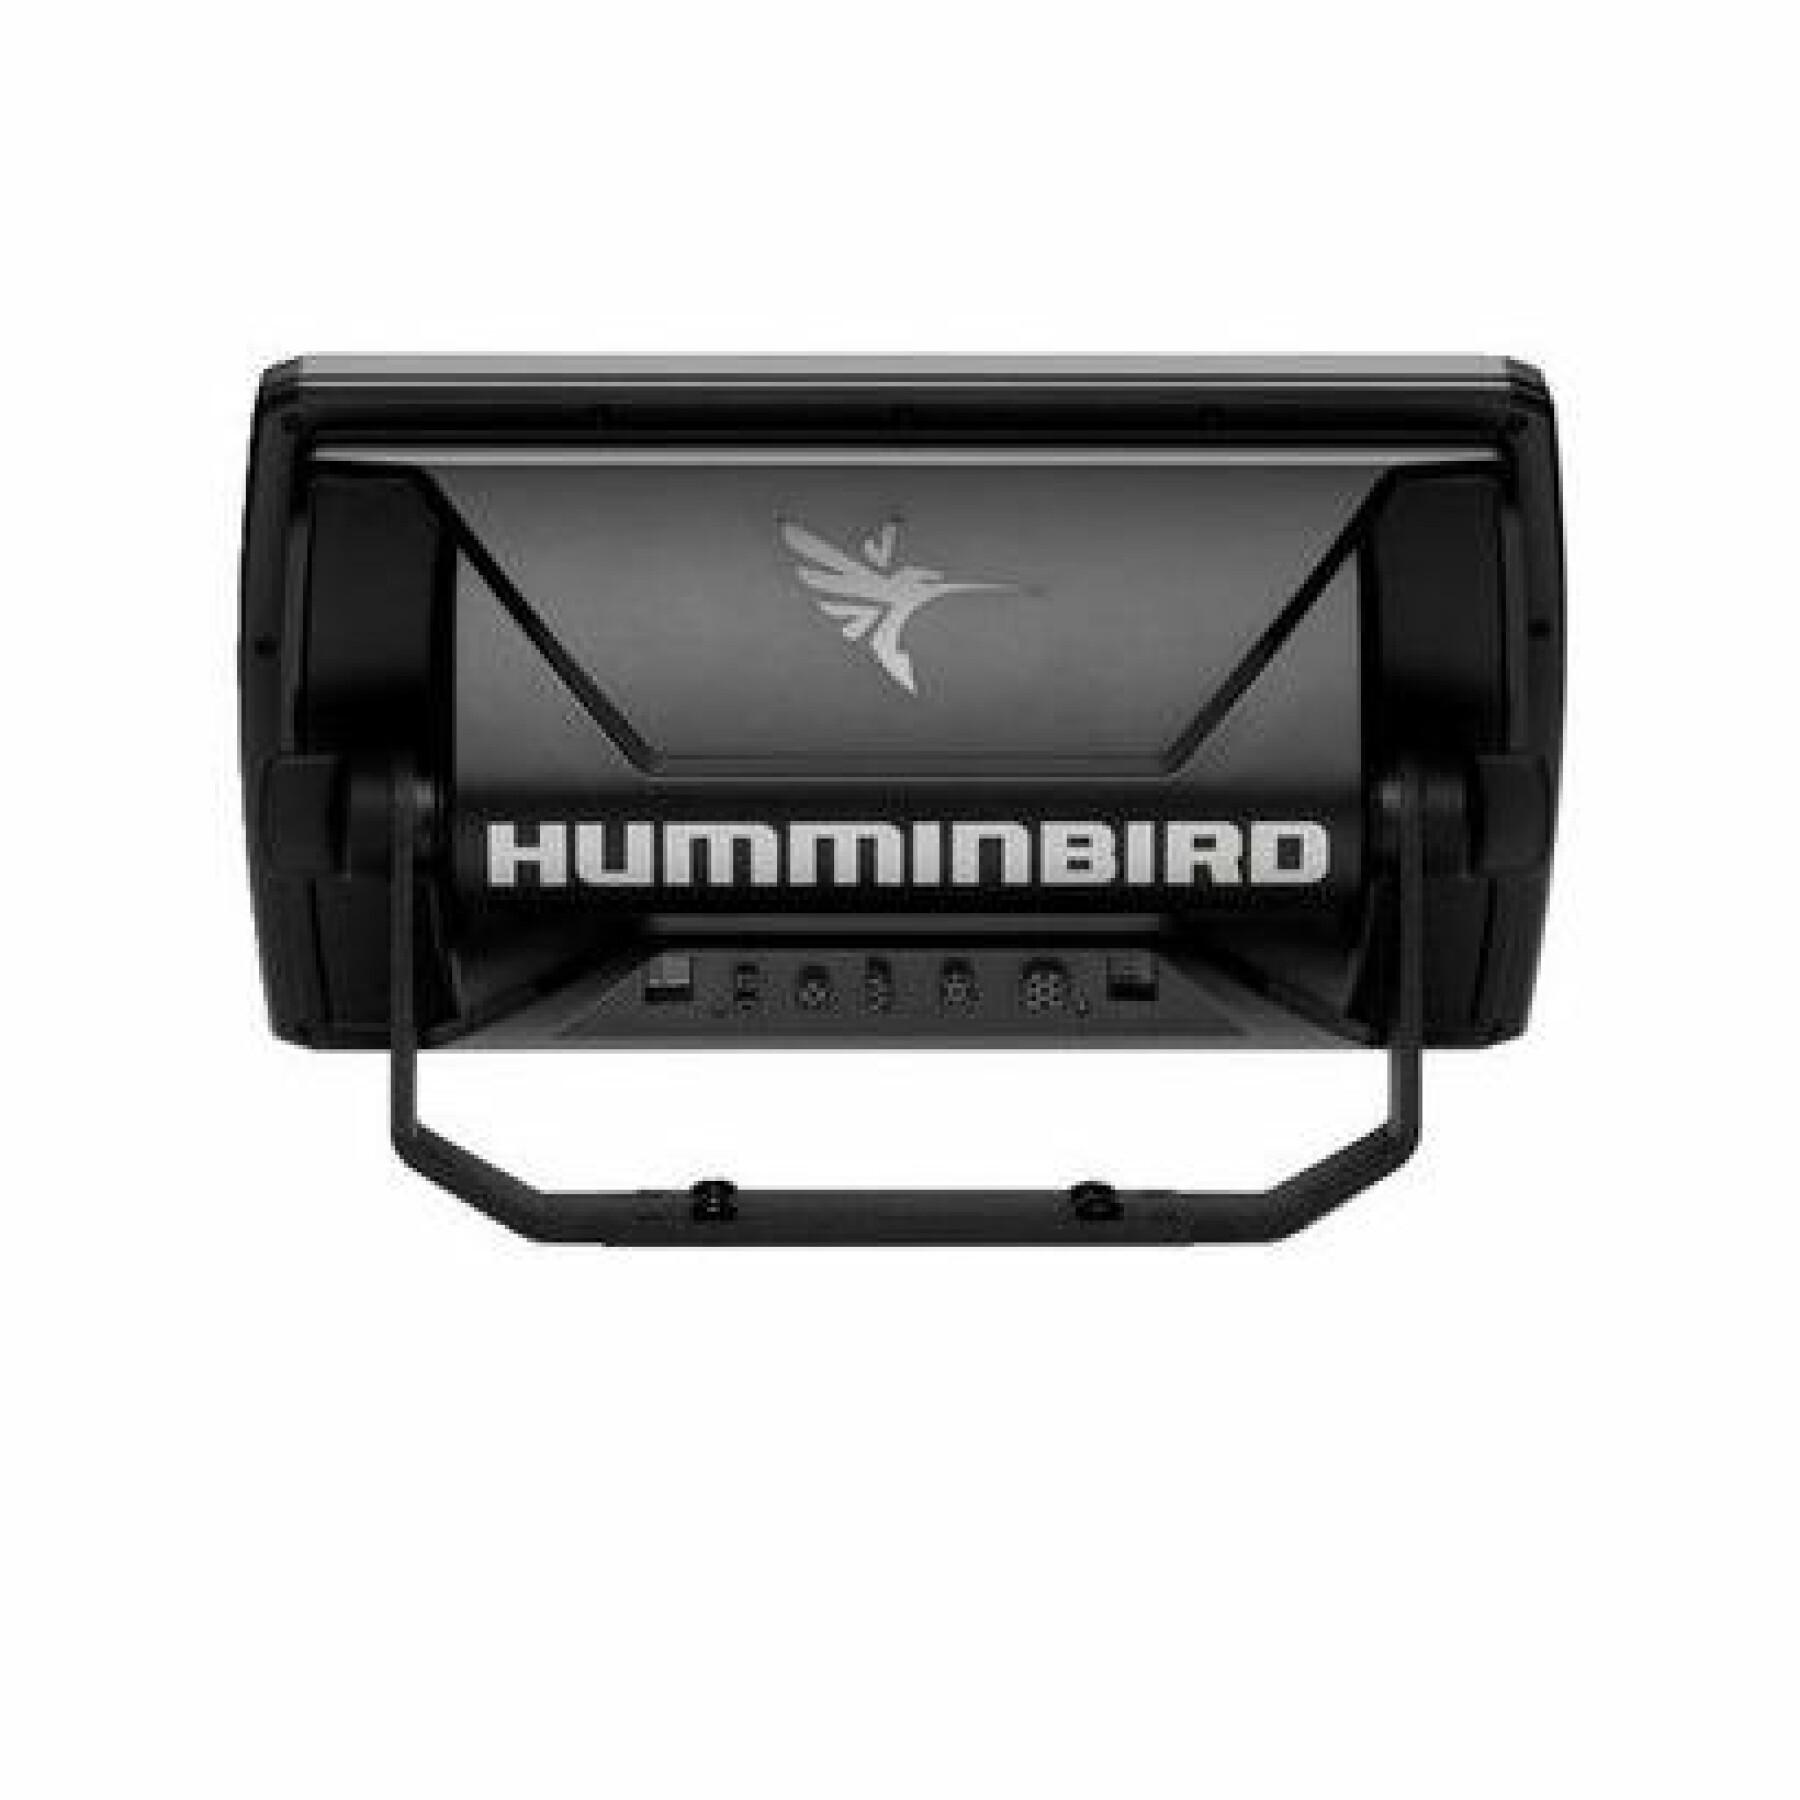 Gps en sounder Humminbird Helix8G4N versie XD (411330-1M)